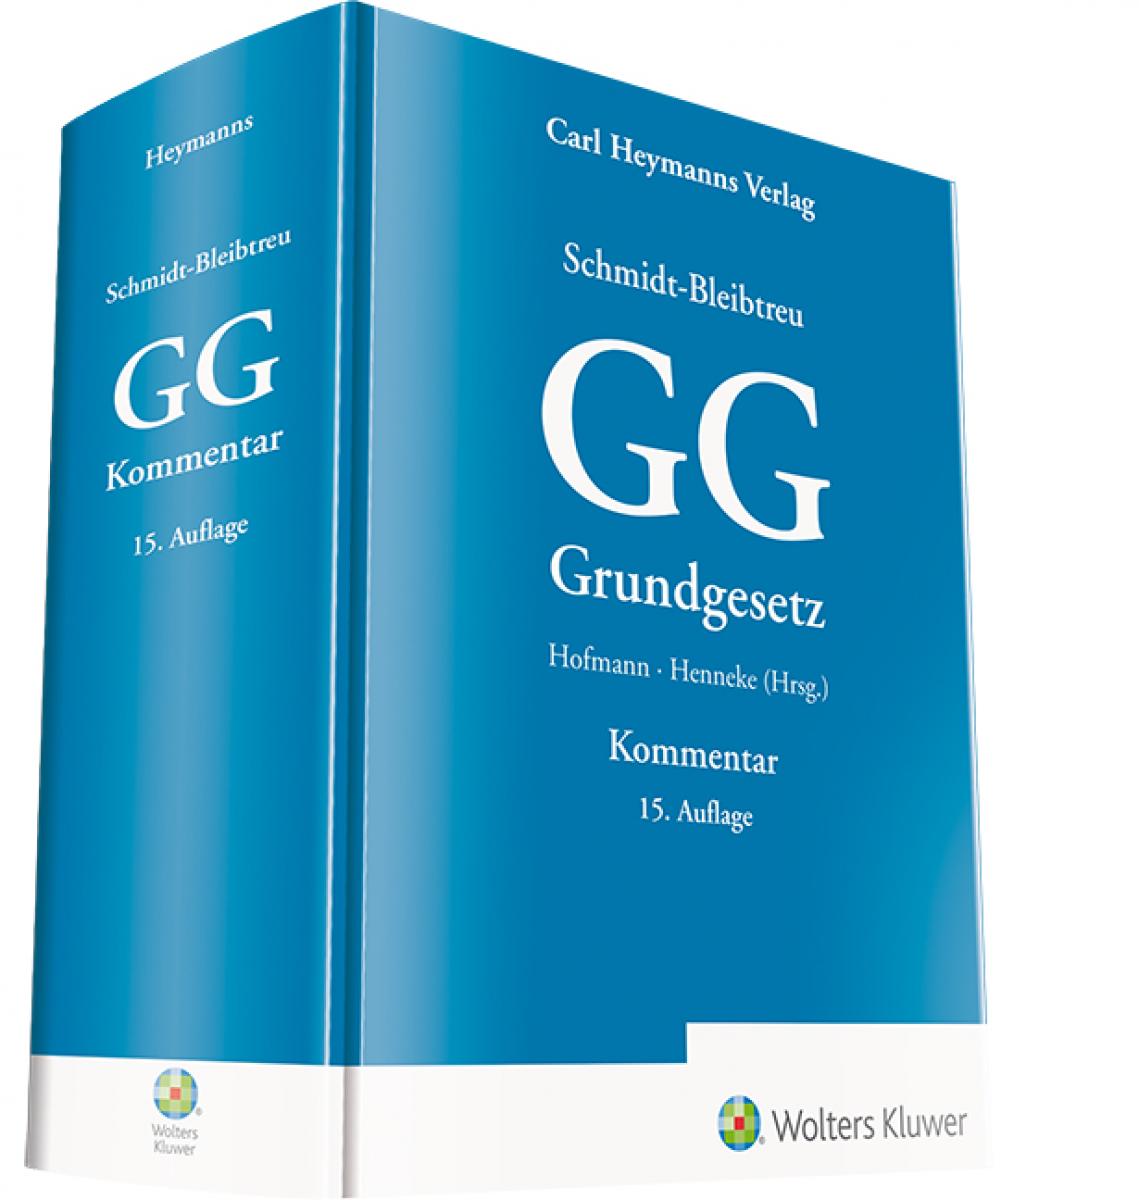 GG - Grundgesetz | Schmidt-Bleibtreu